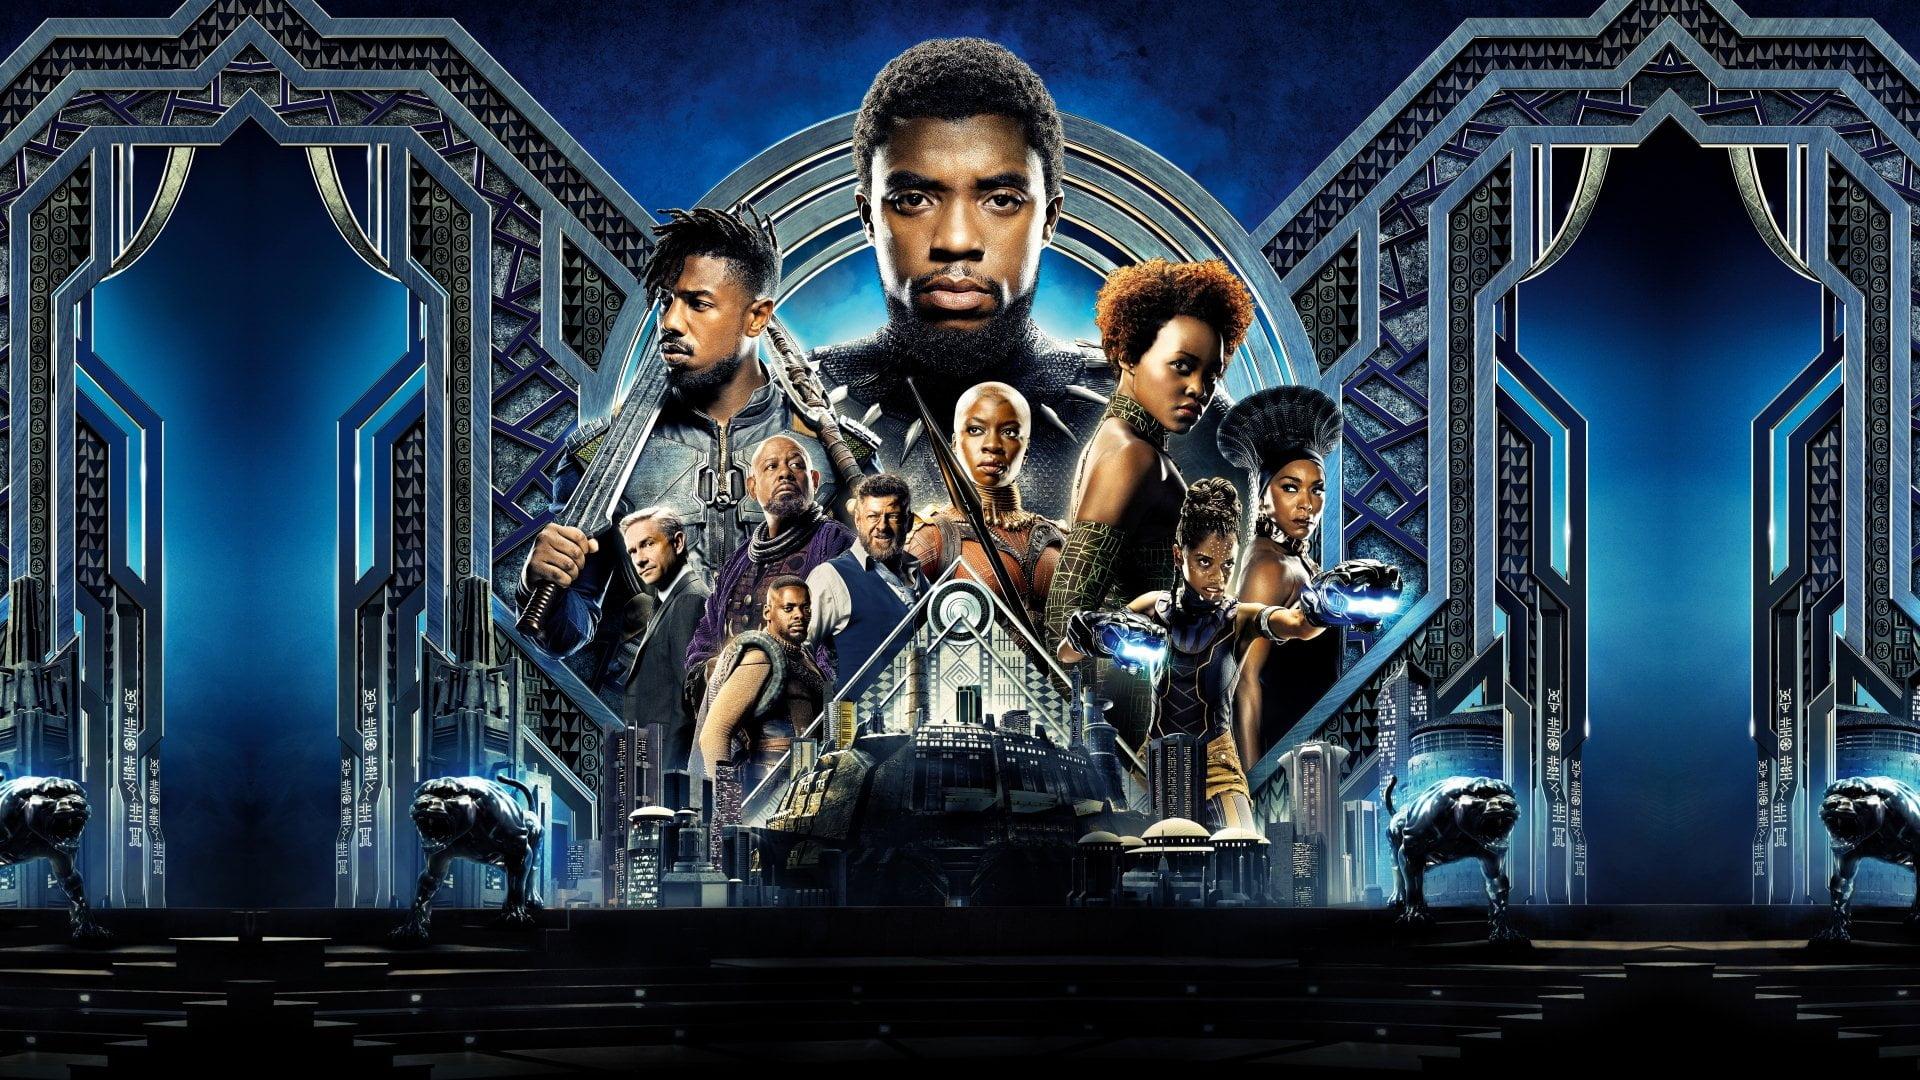 HD wallpaper: Black Panther movie poster, Andy Serkis, Angela